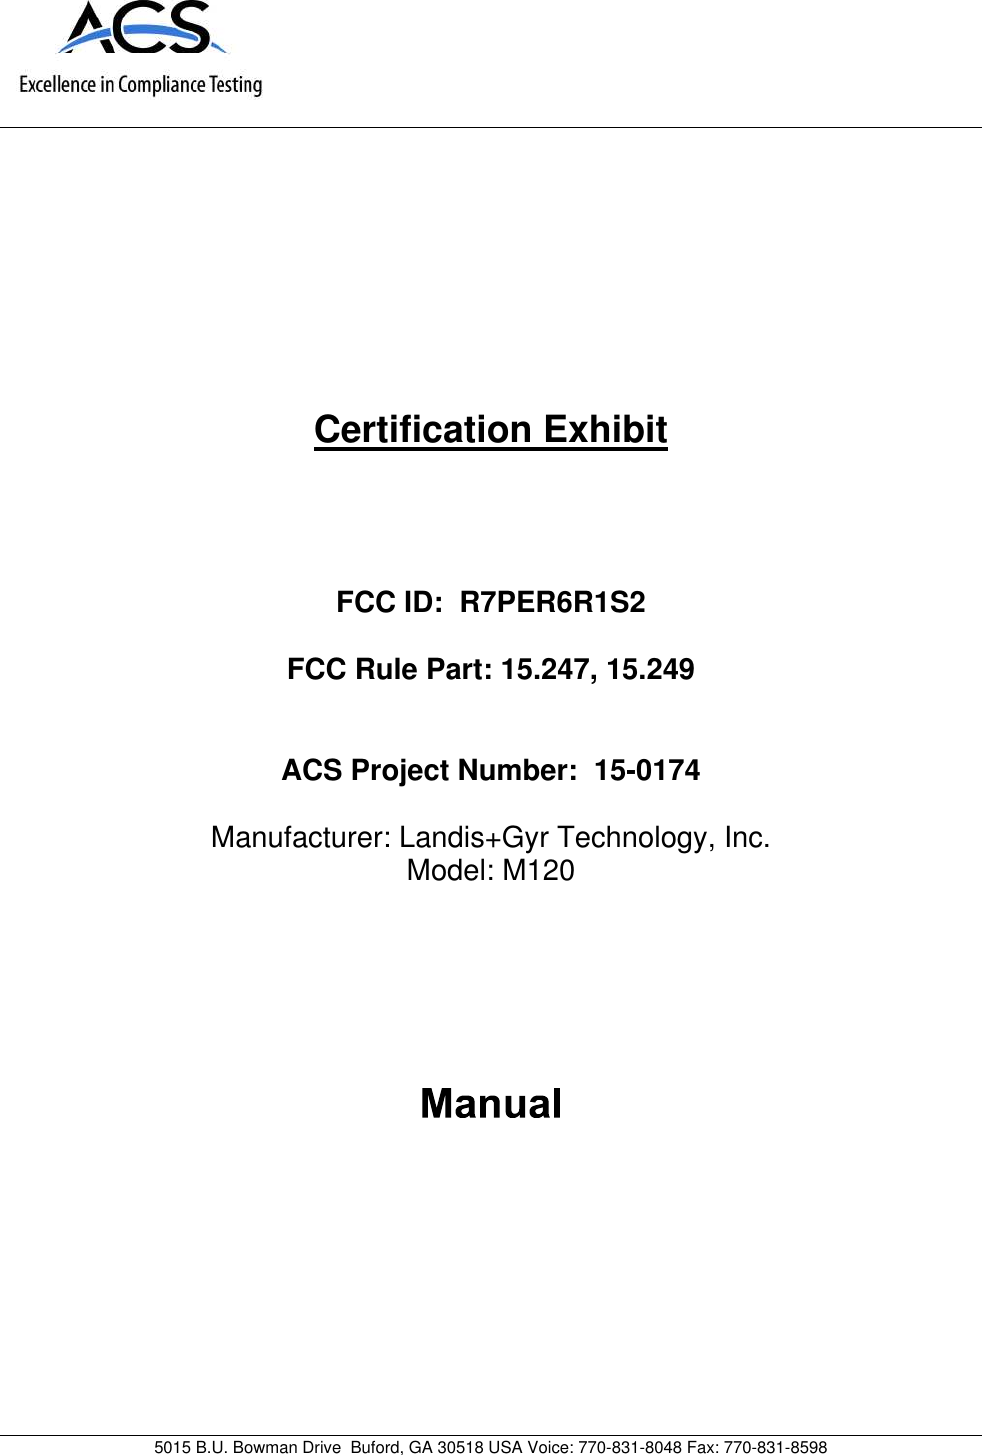 5015 B.U. Bowman Drive Buford, GA 30518 USA Voice: 770-831-8048 Fax: 770-831-8598Certification ExhibitFCC ID: R7PER6R1S2FCC Rule Part: 15.247, 15.249ACS Project Number: 15-0174Manufacturer: Landis+Gyr Technology, Inc.Model: M120